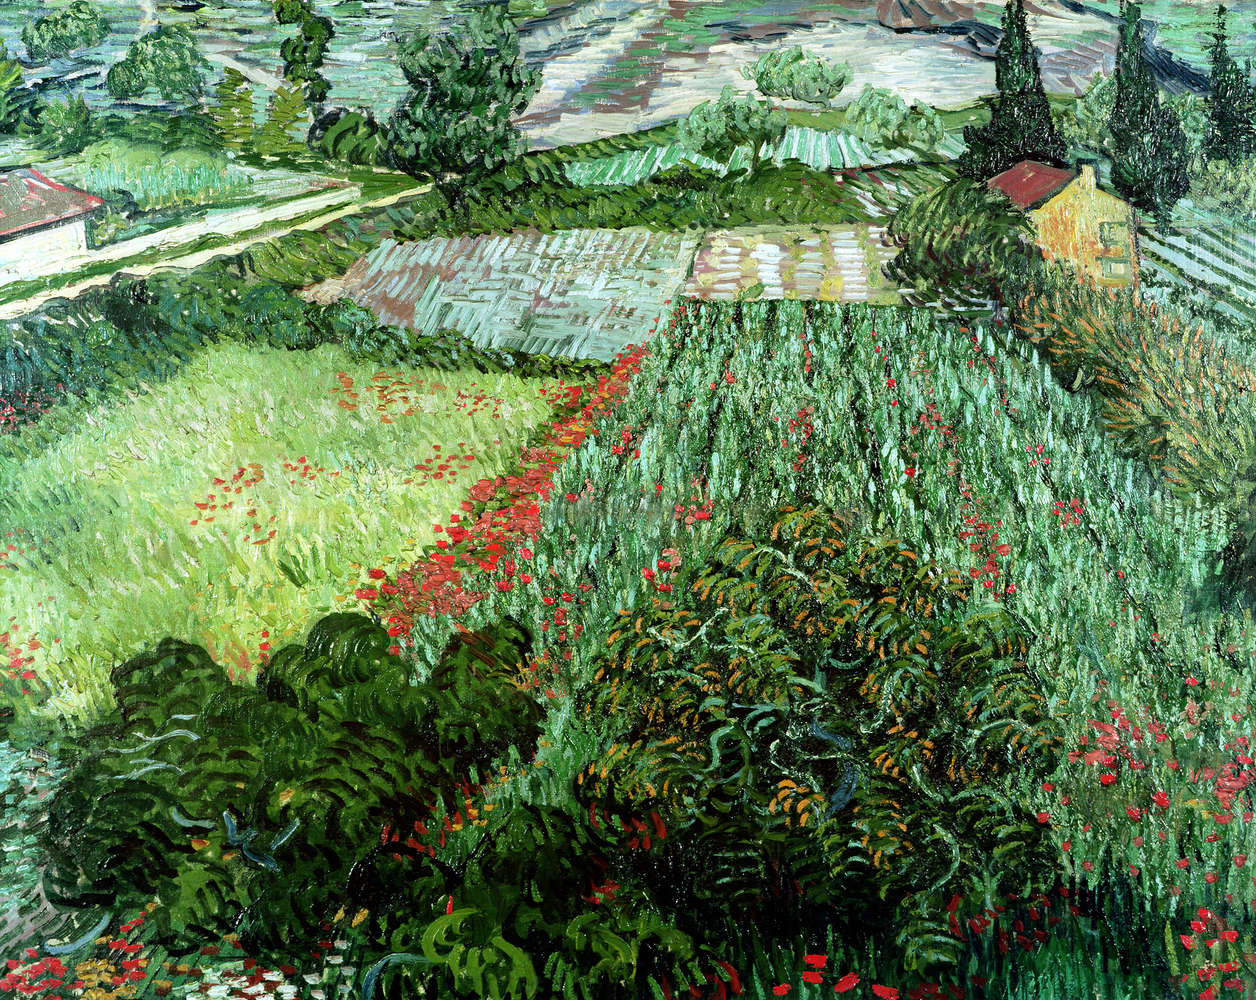             Campo con papaveri" murale di Vincent van Gogh
        